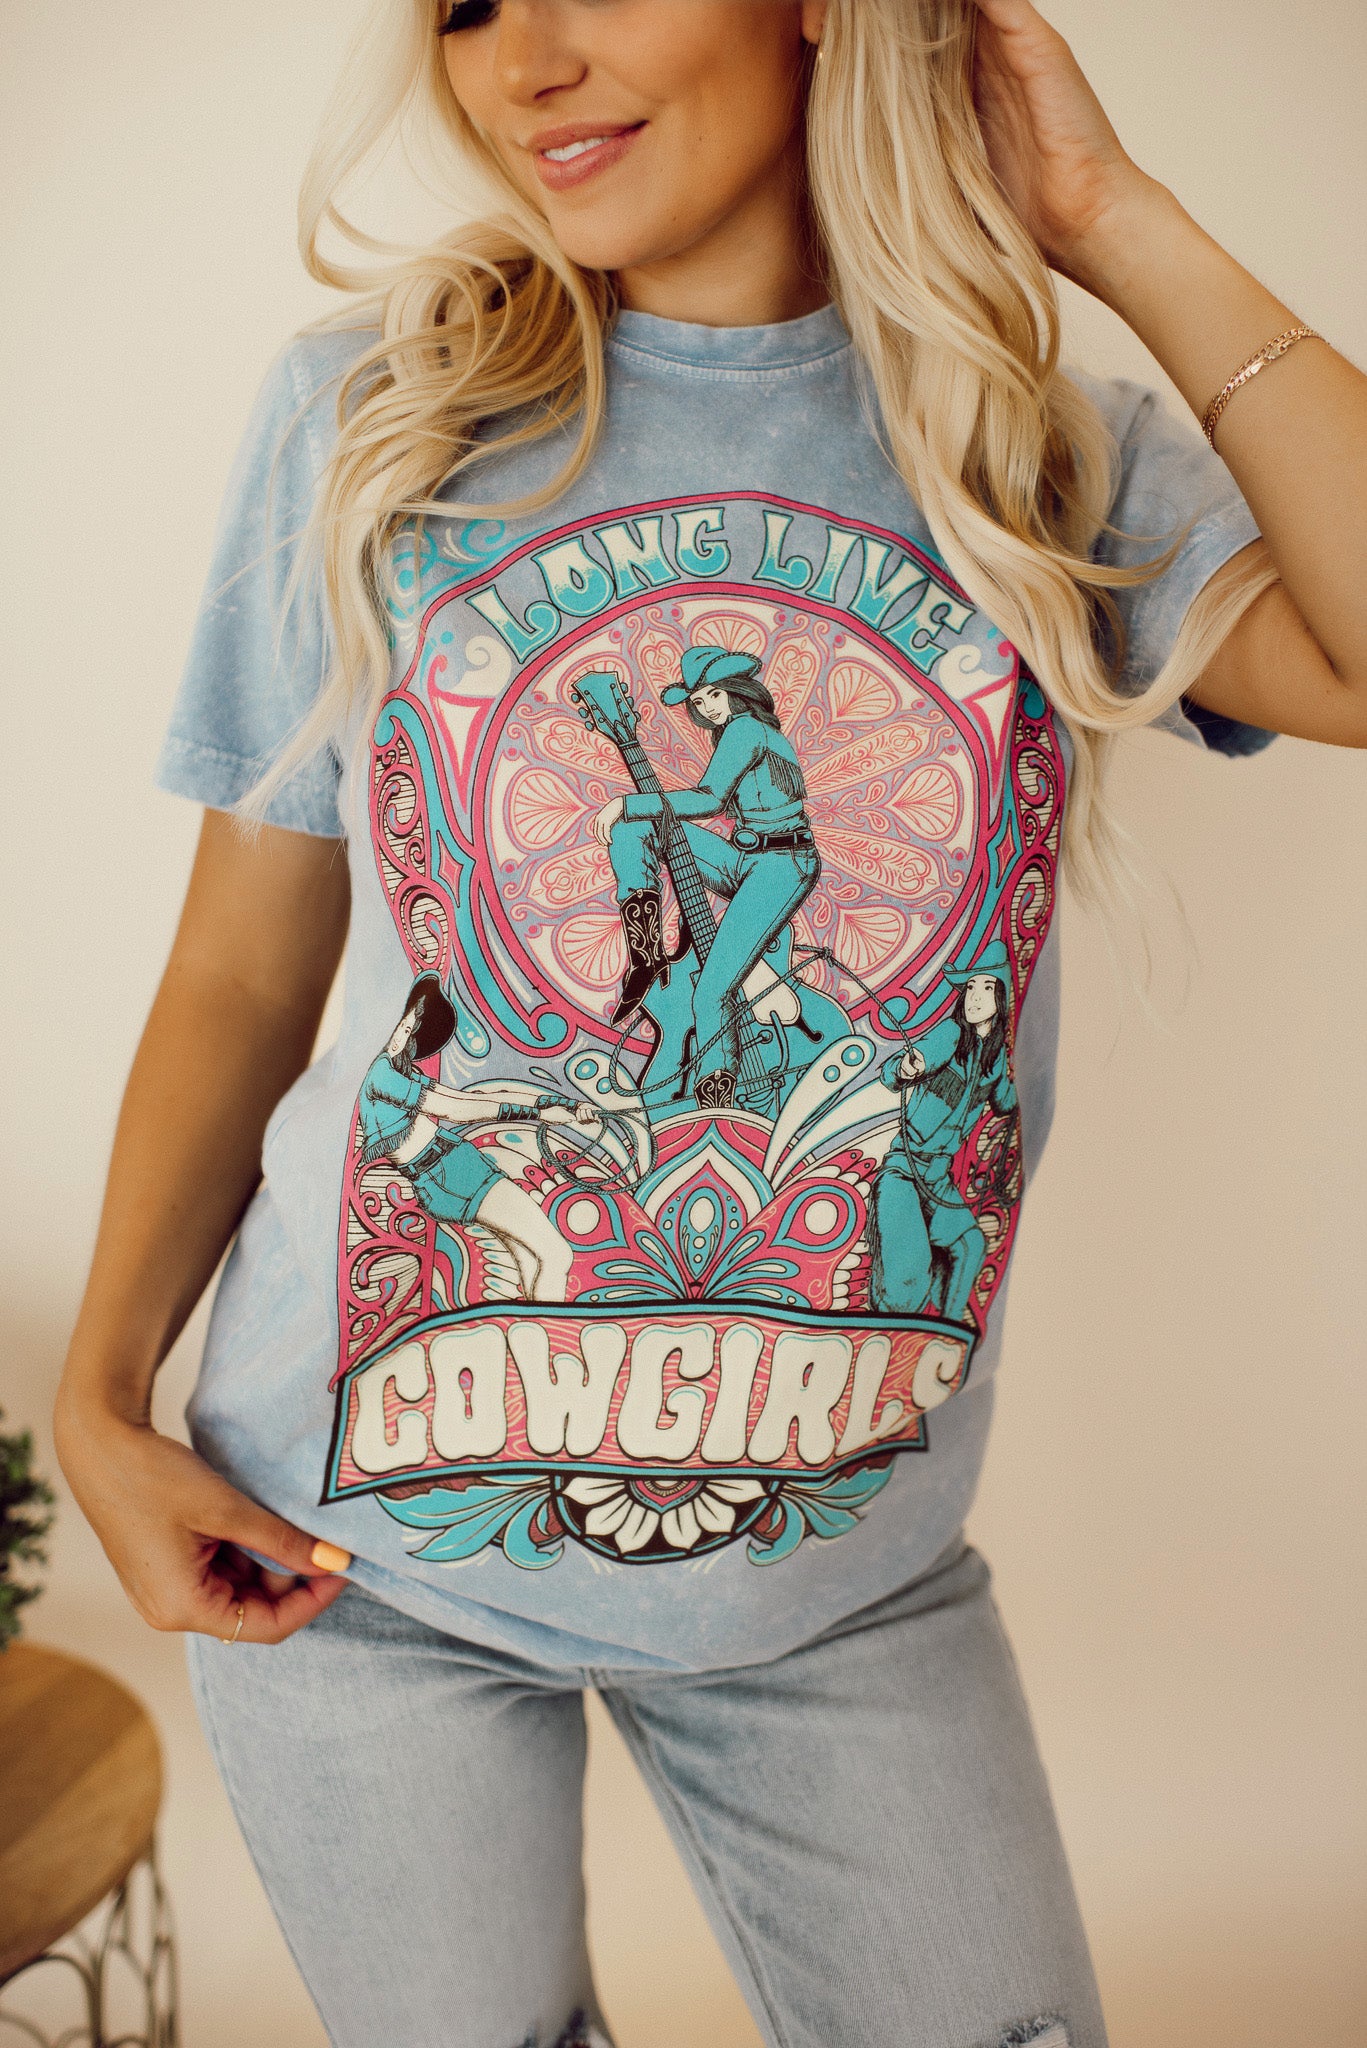 Long Live Cowgirls Tee Shirt (Blue)